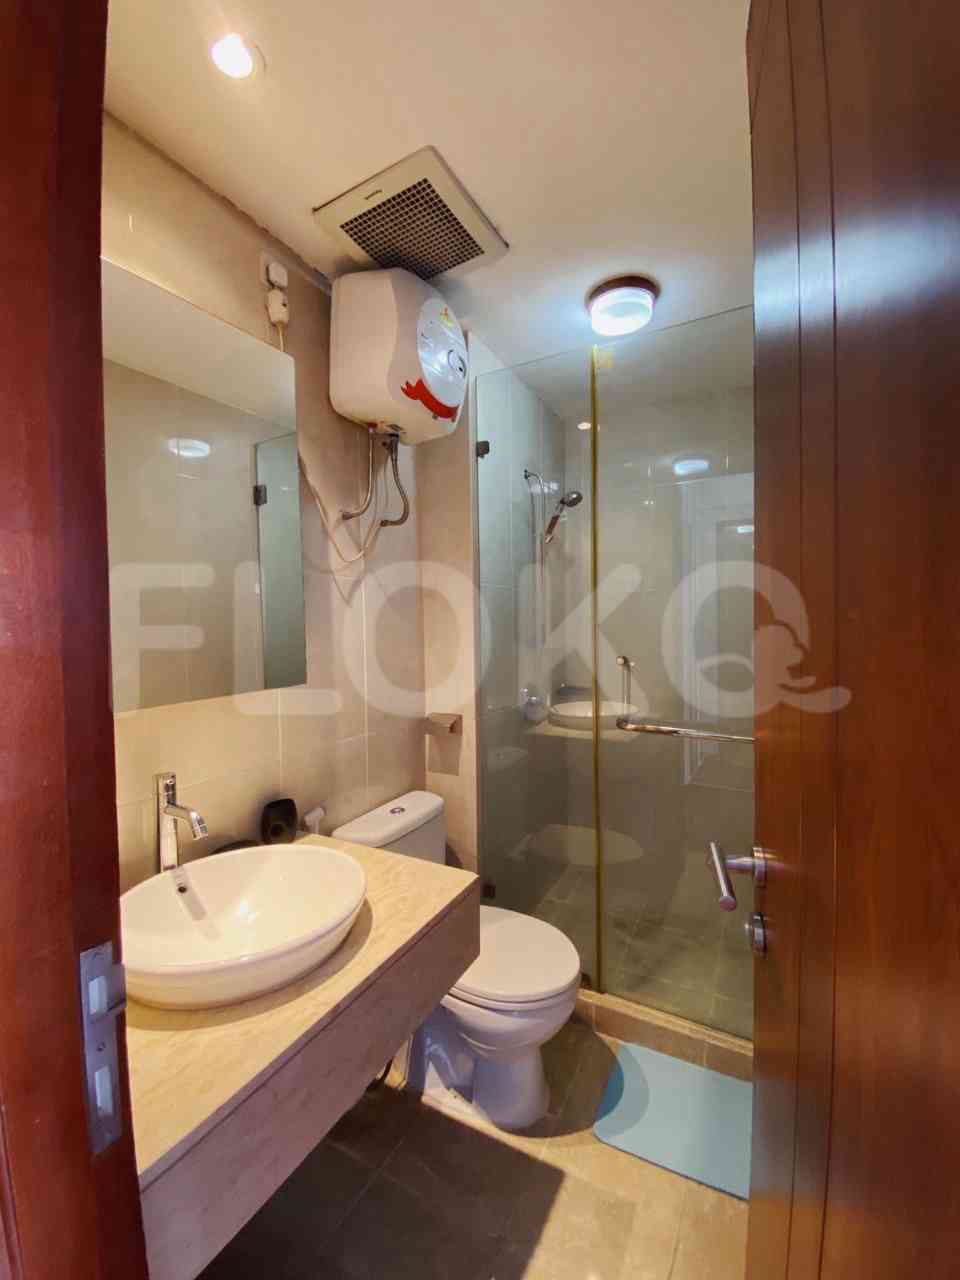 4 Bedroom on 26th Floor for Rent in Permata Hijau Suites Apartment - fpef10 13